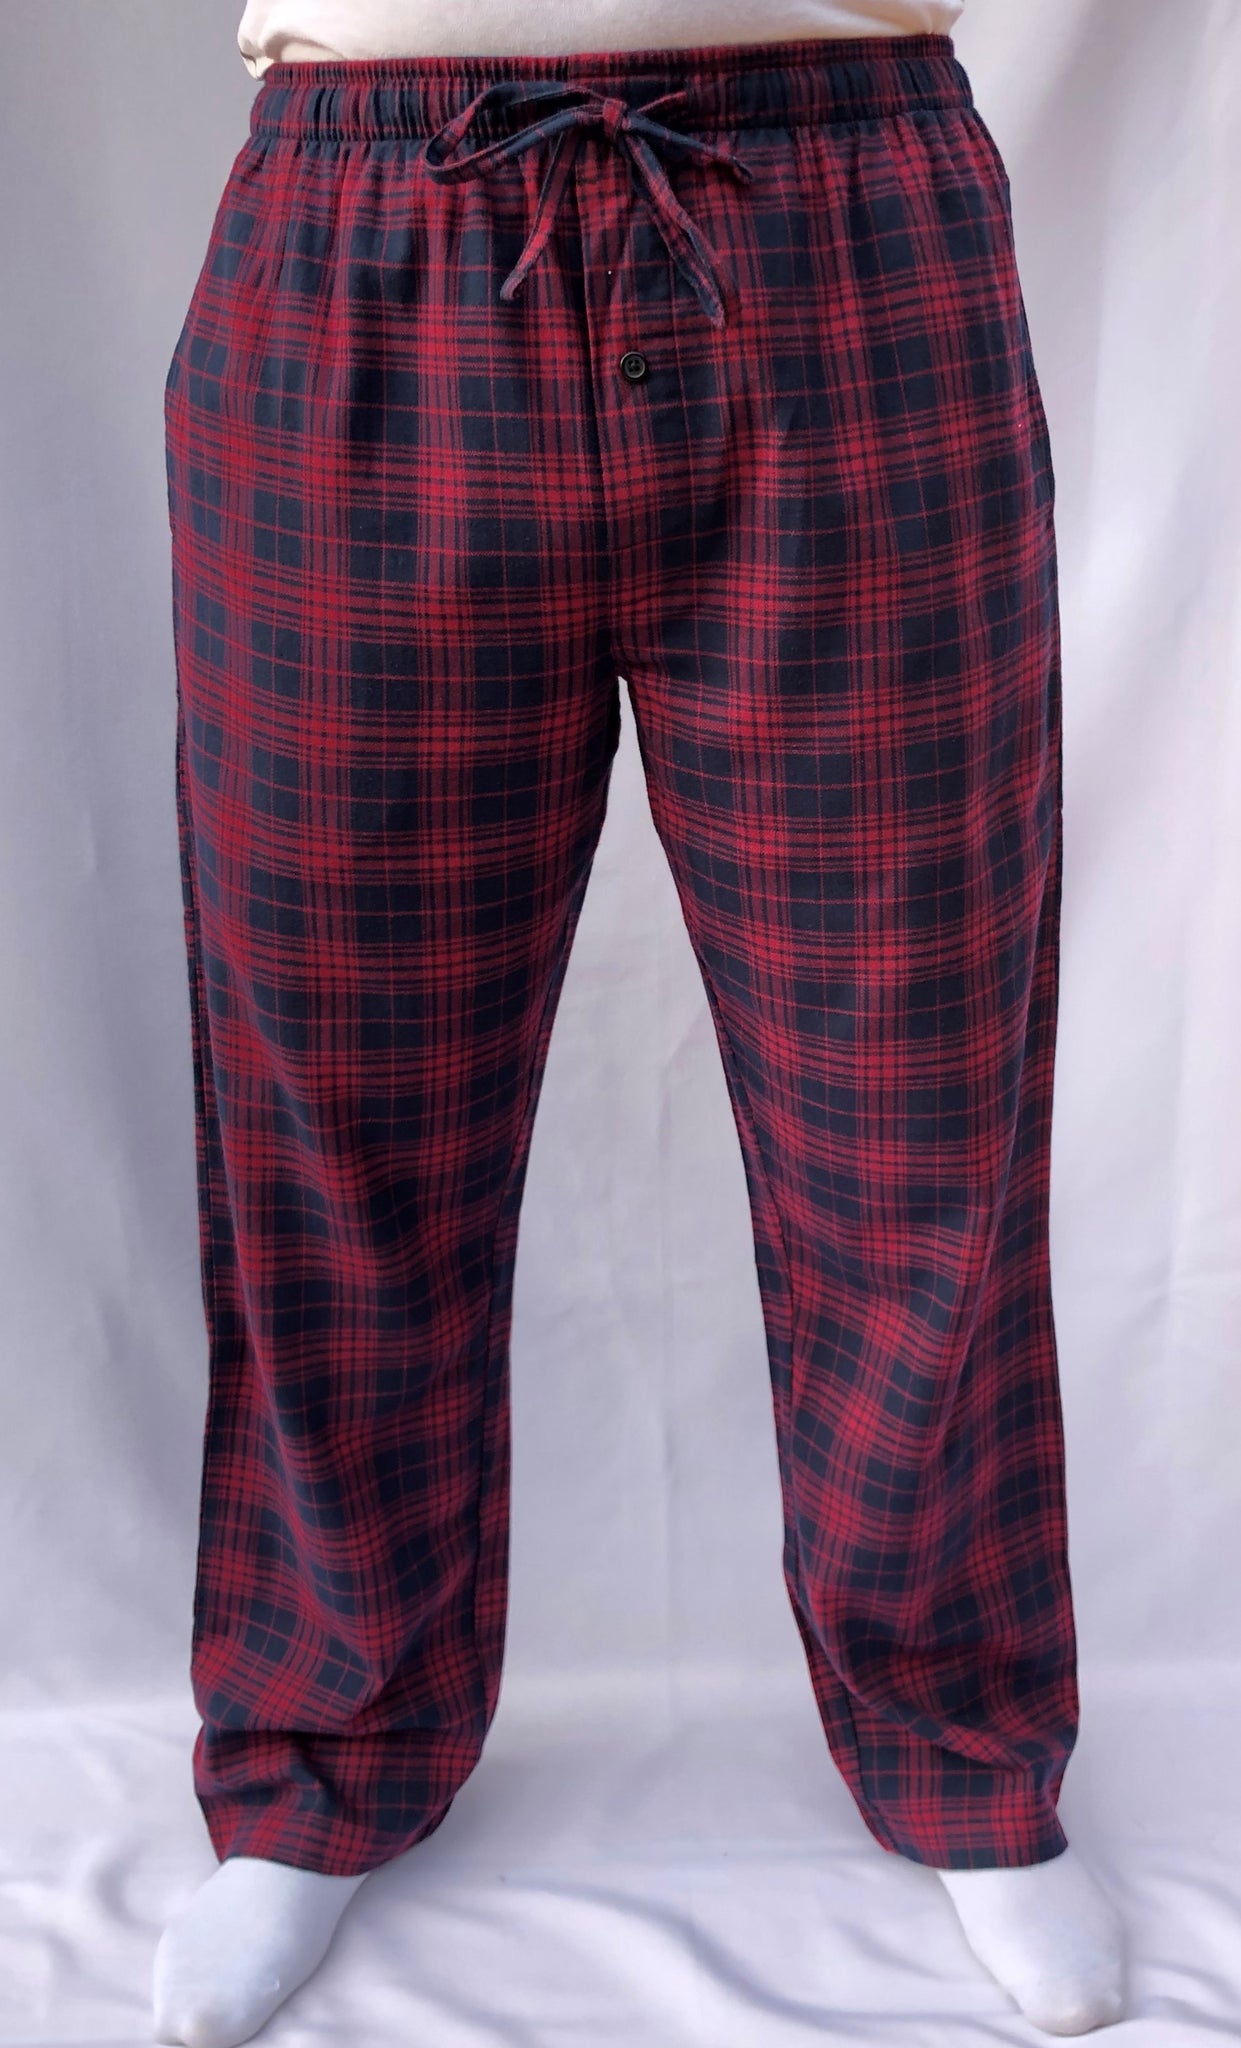 GIVEITPRO -100% Cotton Yarn-dye Woven Flannel Pajama Pant Pajama